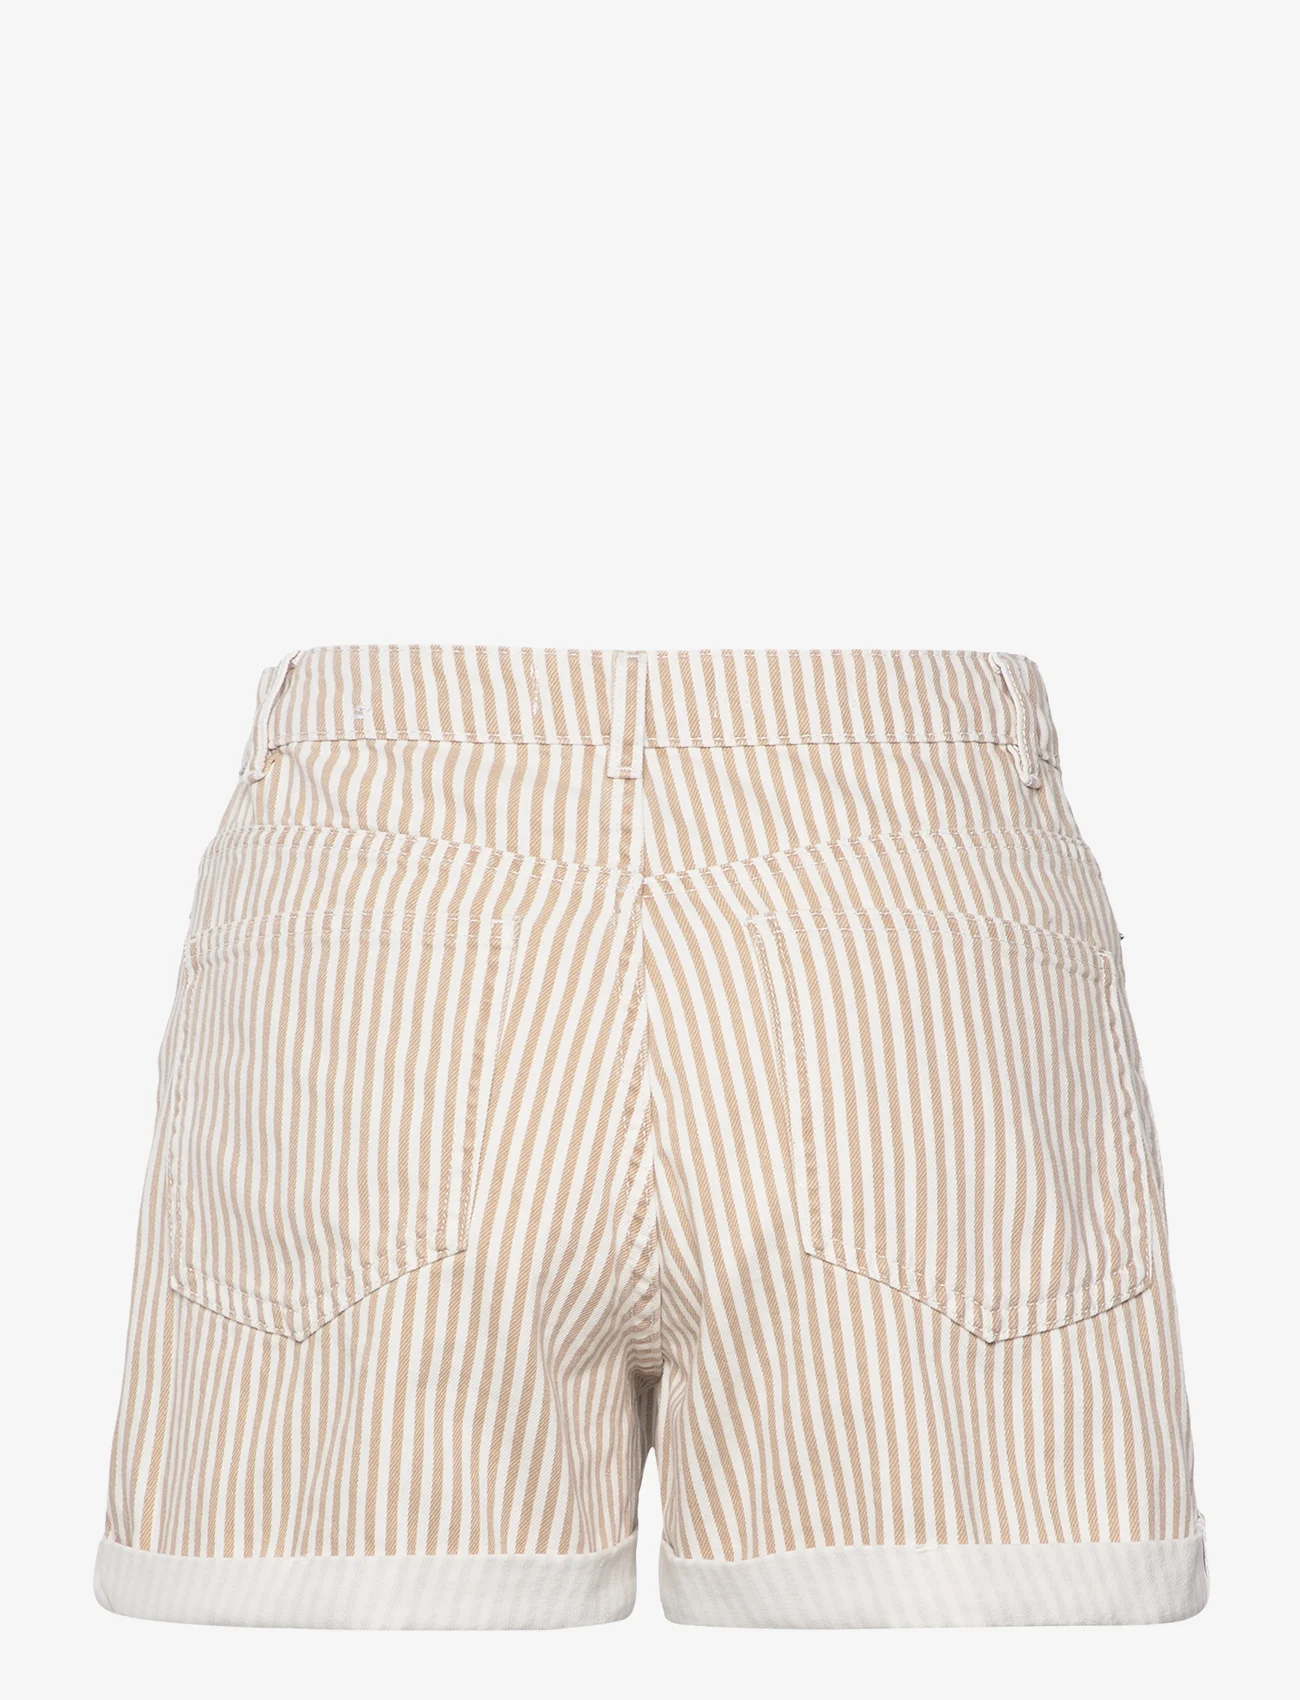 Mango - Mom-fit denim shorts - denimshorts - lt pastel brown - 1